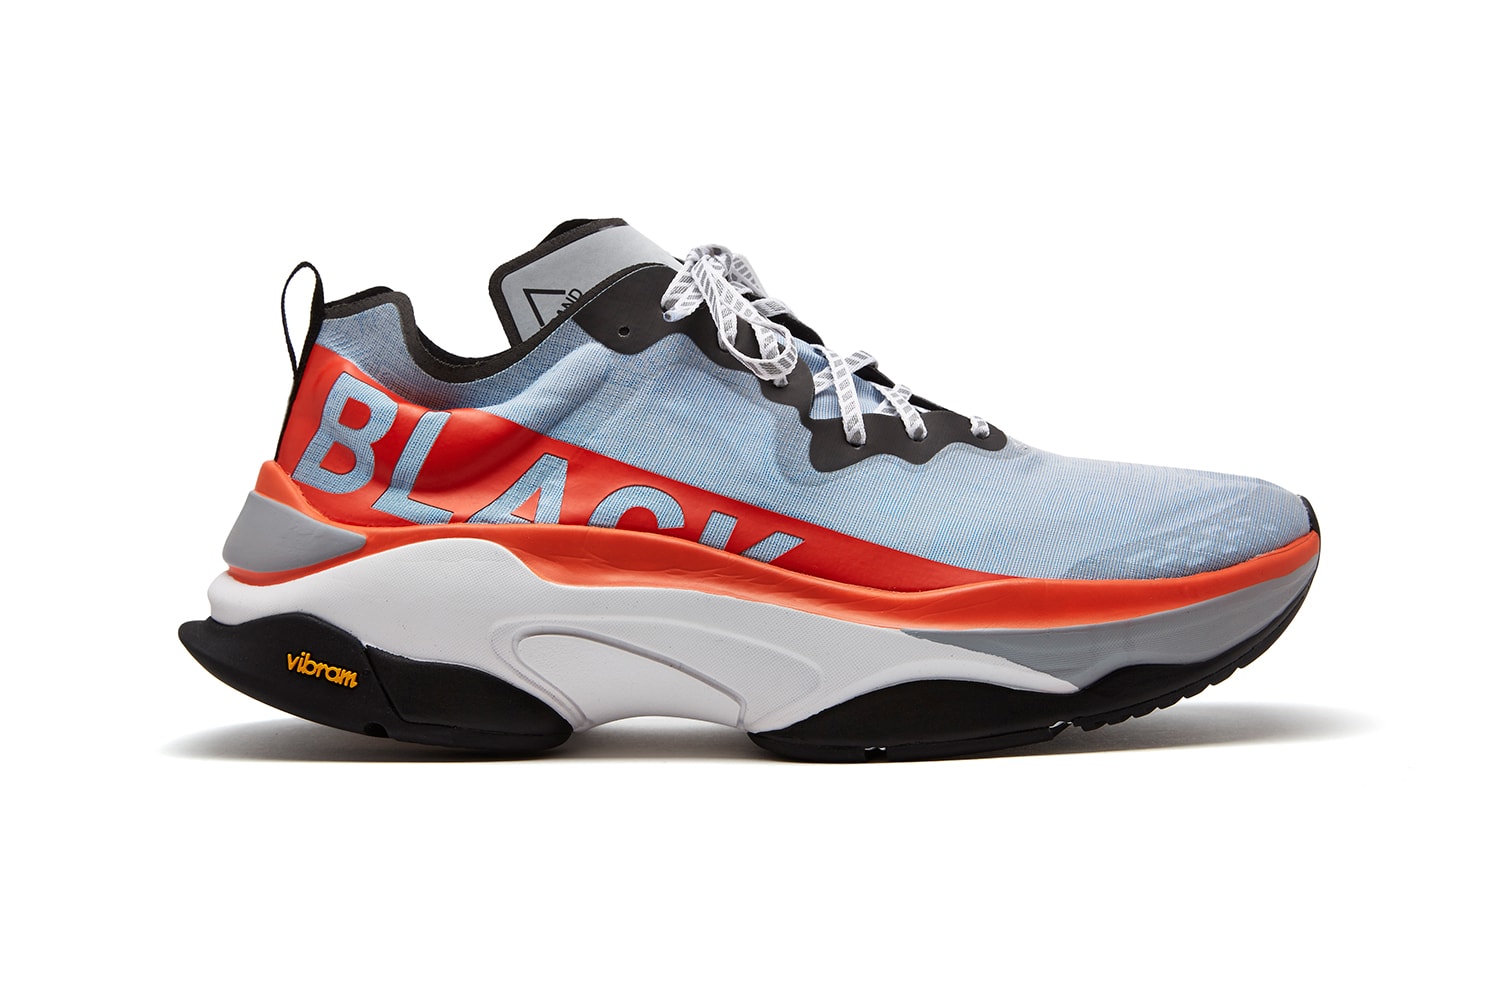 Brandblack Fall Winter 2018 Kite Racer footwear David Raysse sneakers shoes kicks trainers colorway black orange white blue monochrome vibram